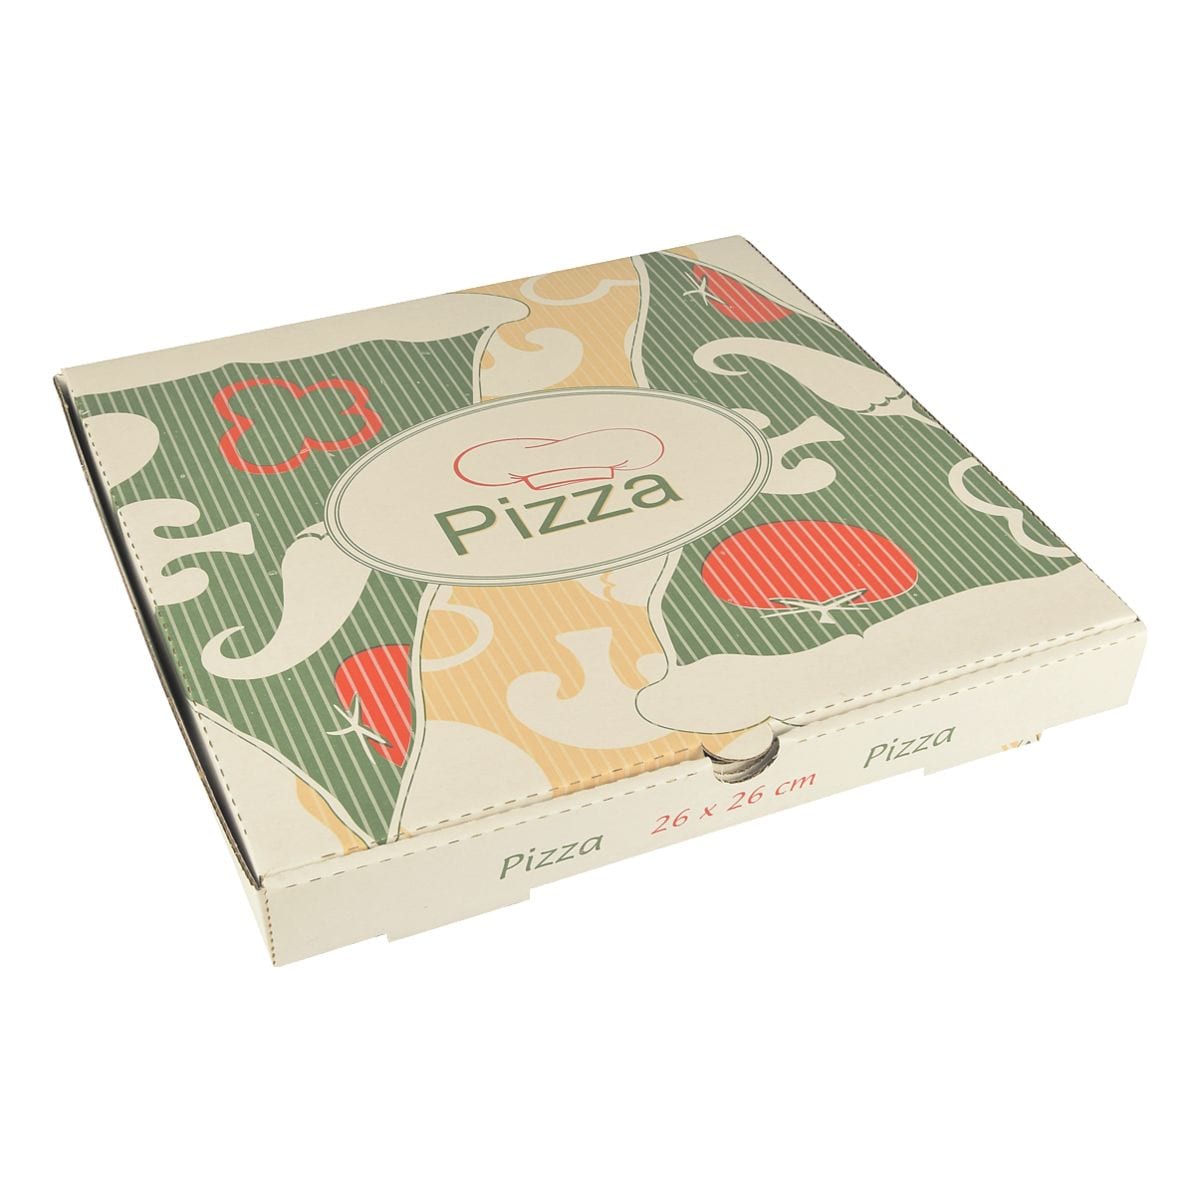 Papstar Pizzakartons pure 26 x 26 cm, 100 Stck